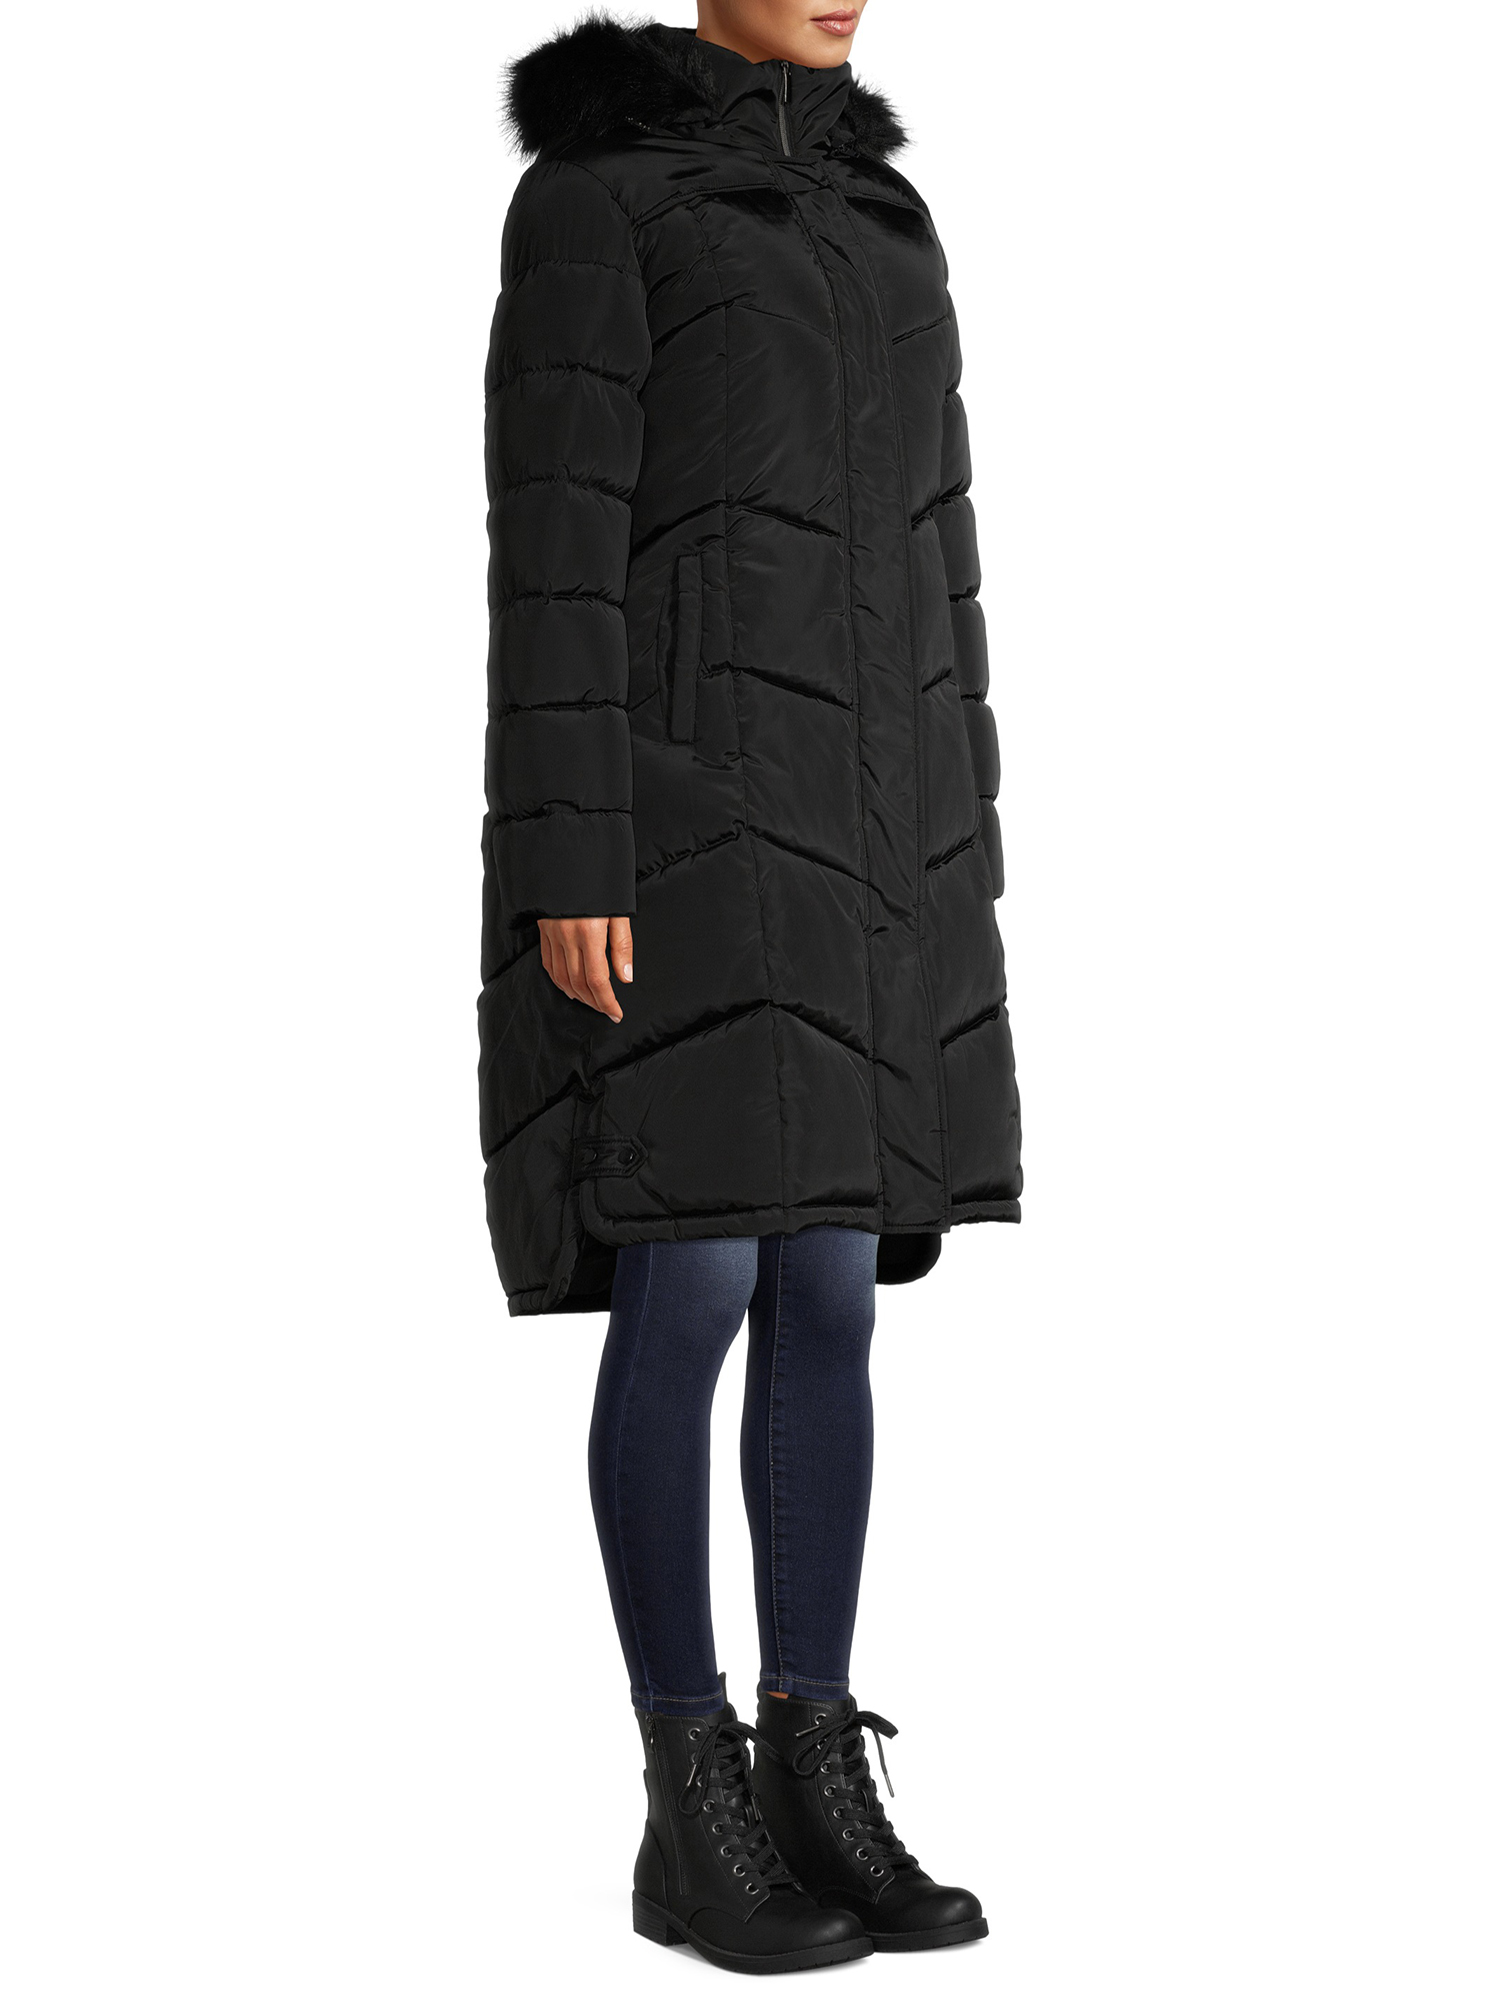 Big Chill Women's Maxi Chevron Puffer Coat with Faux Fur Trim Hood - image 4 of 6